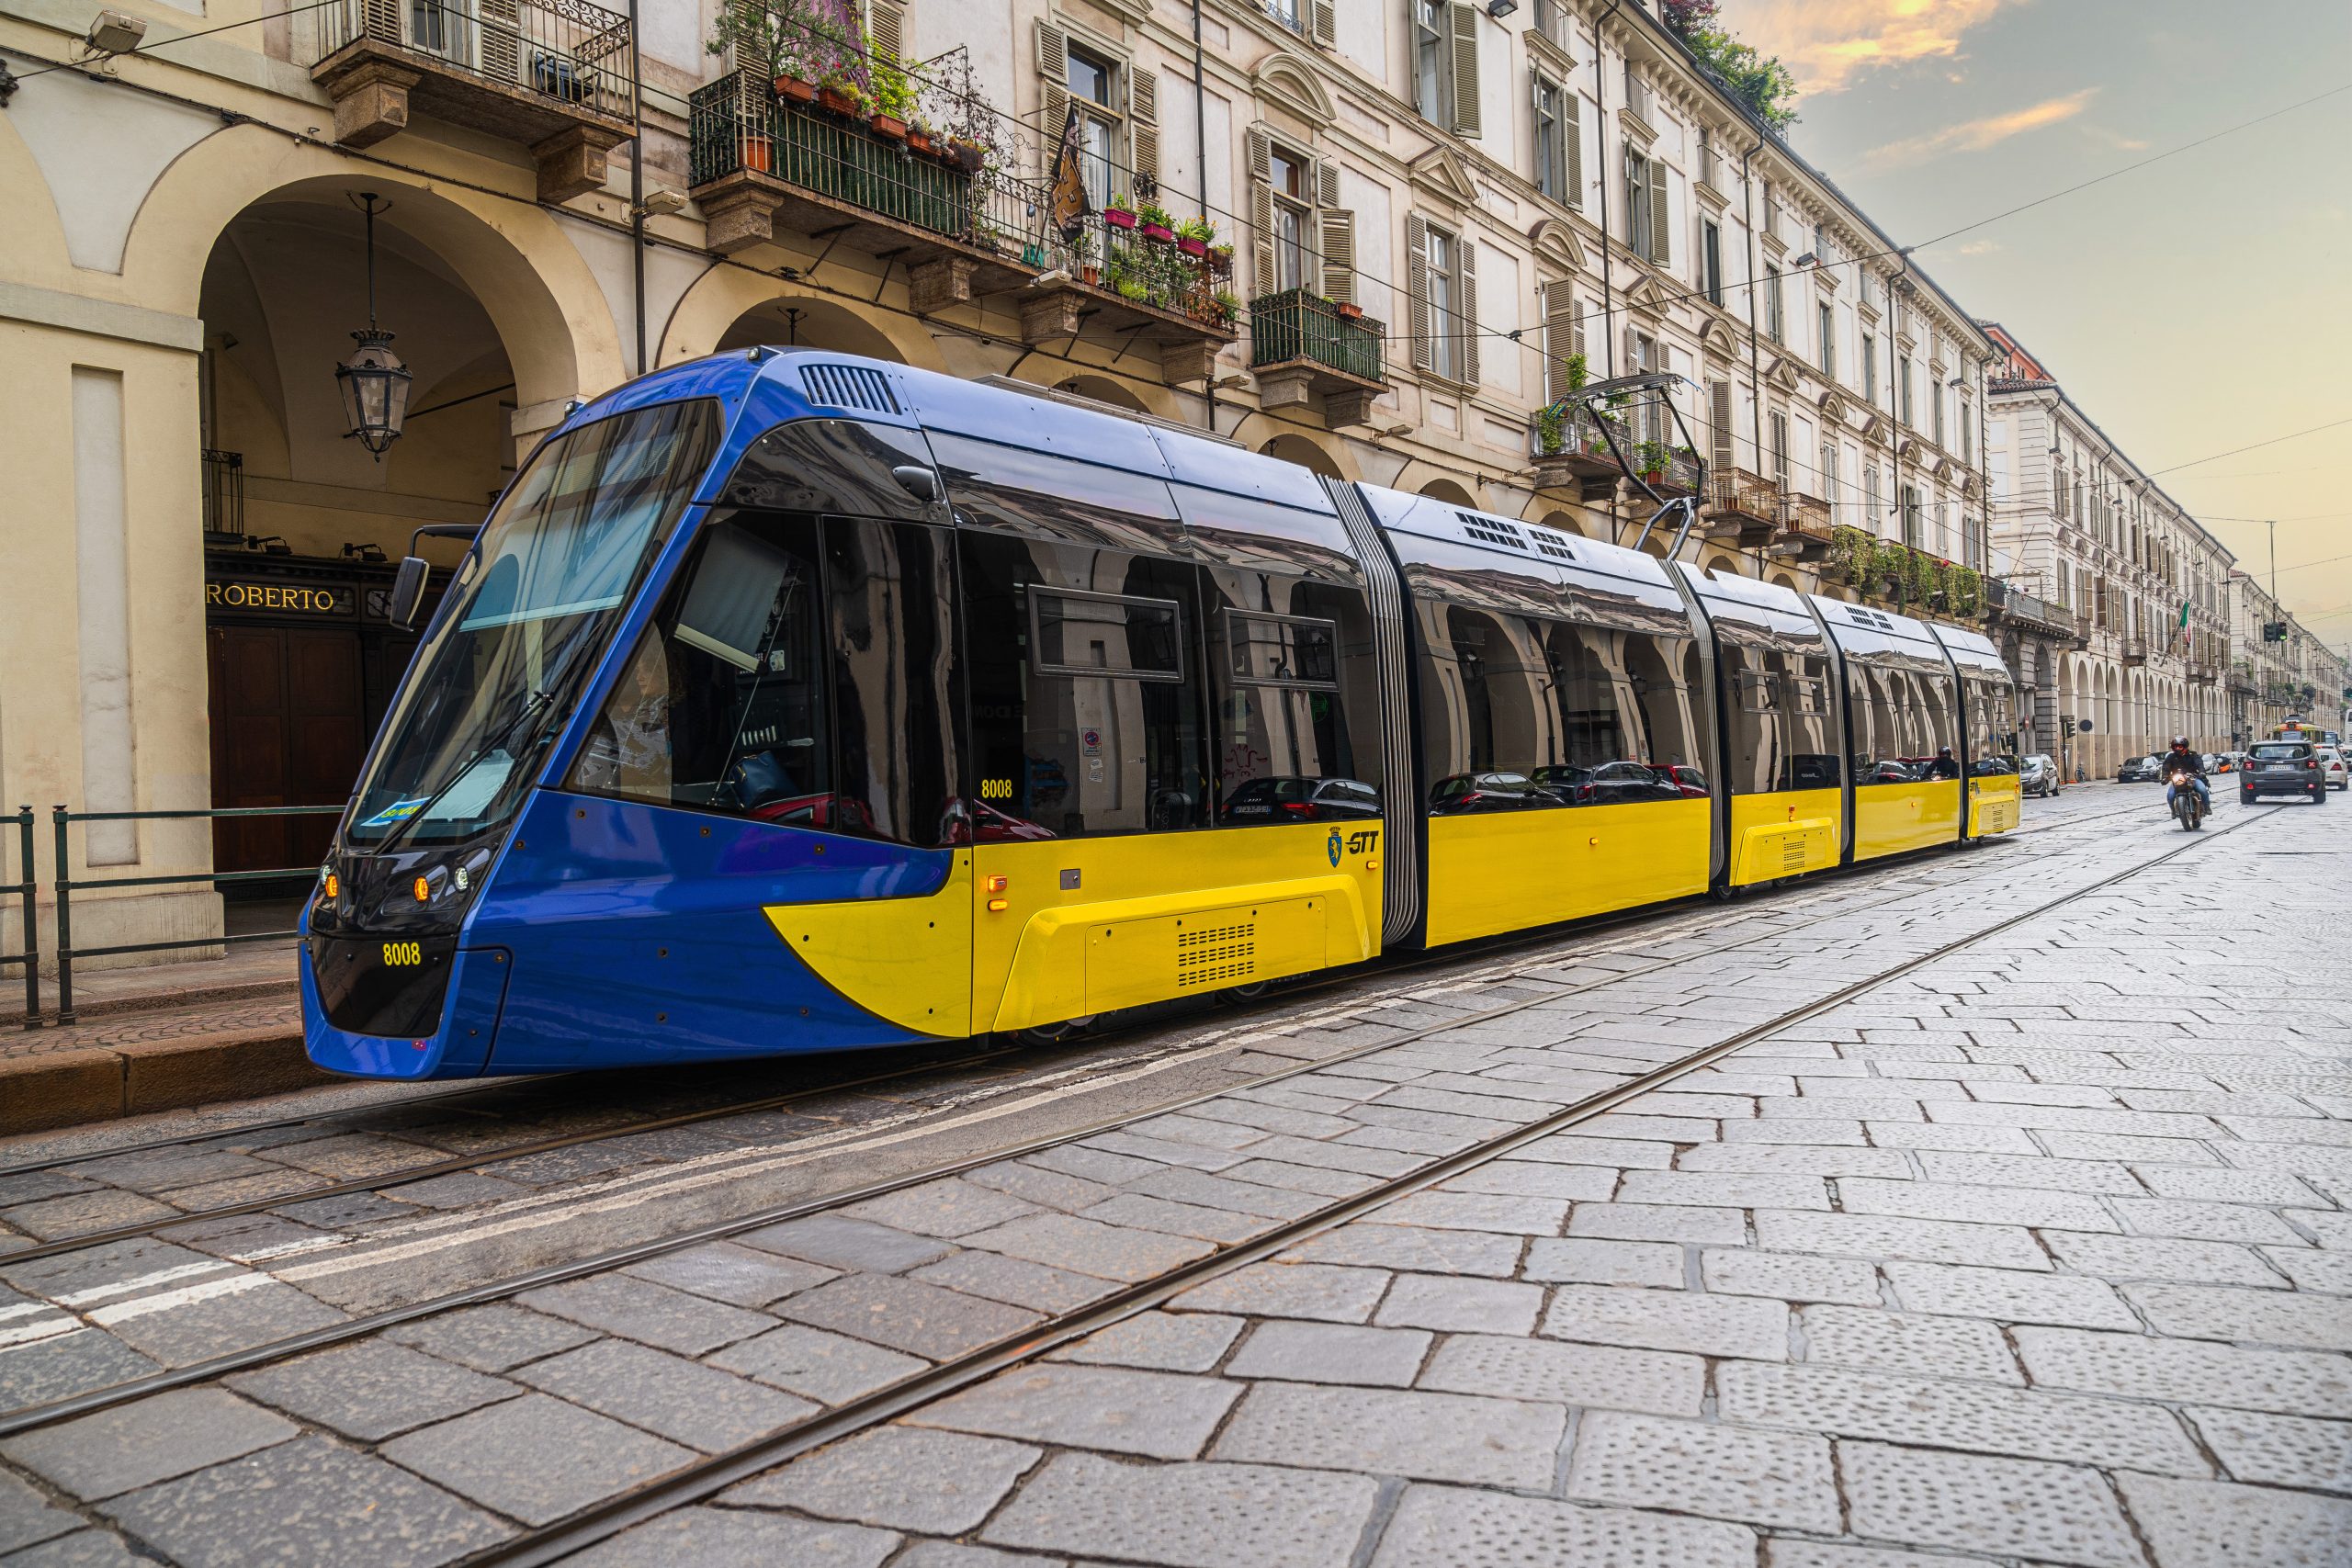 Turin bespoke trams